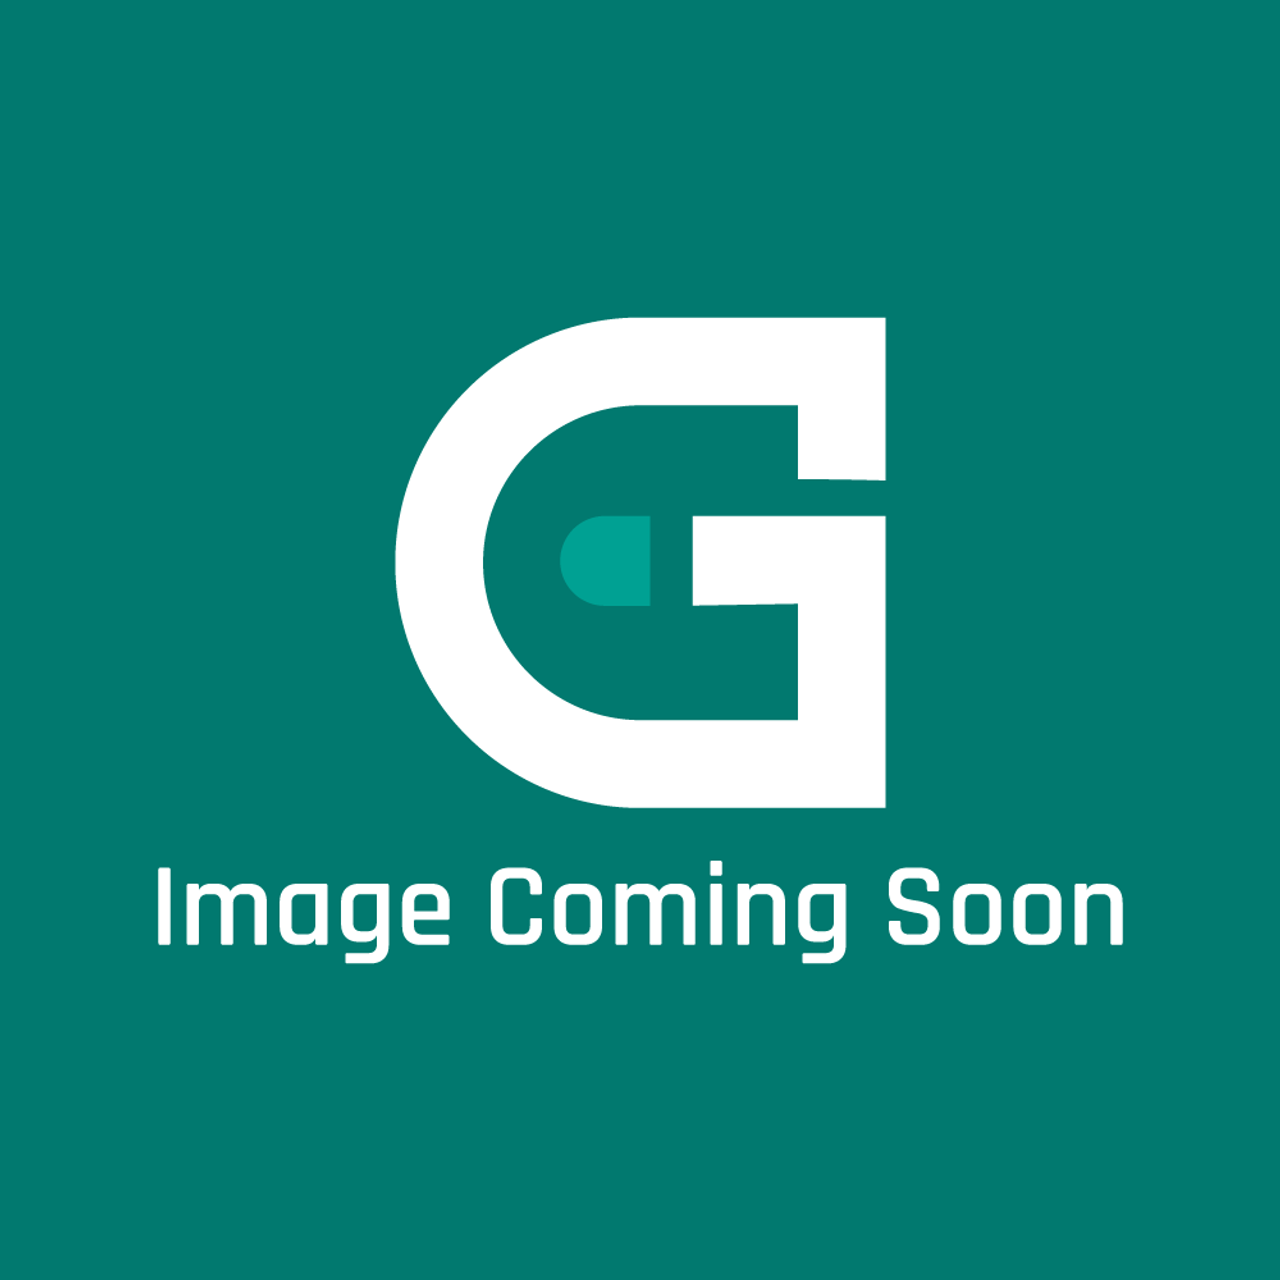 AGA Marvel R2214 - Ashdoor Frame Regent/Royal - Image Coming Soon!